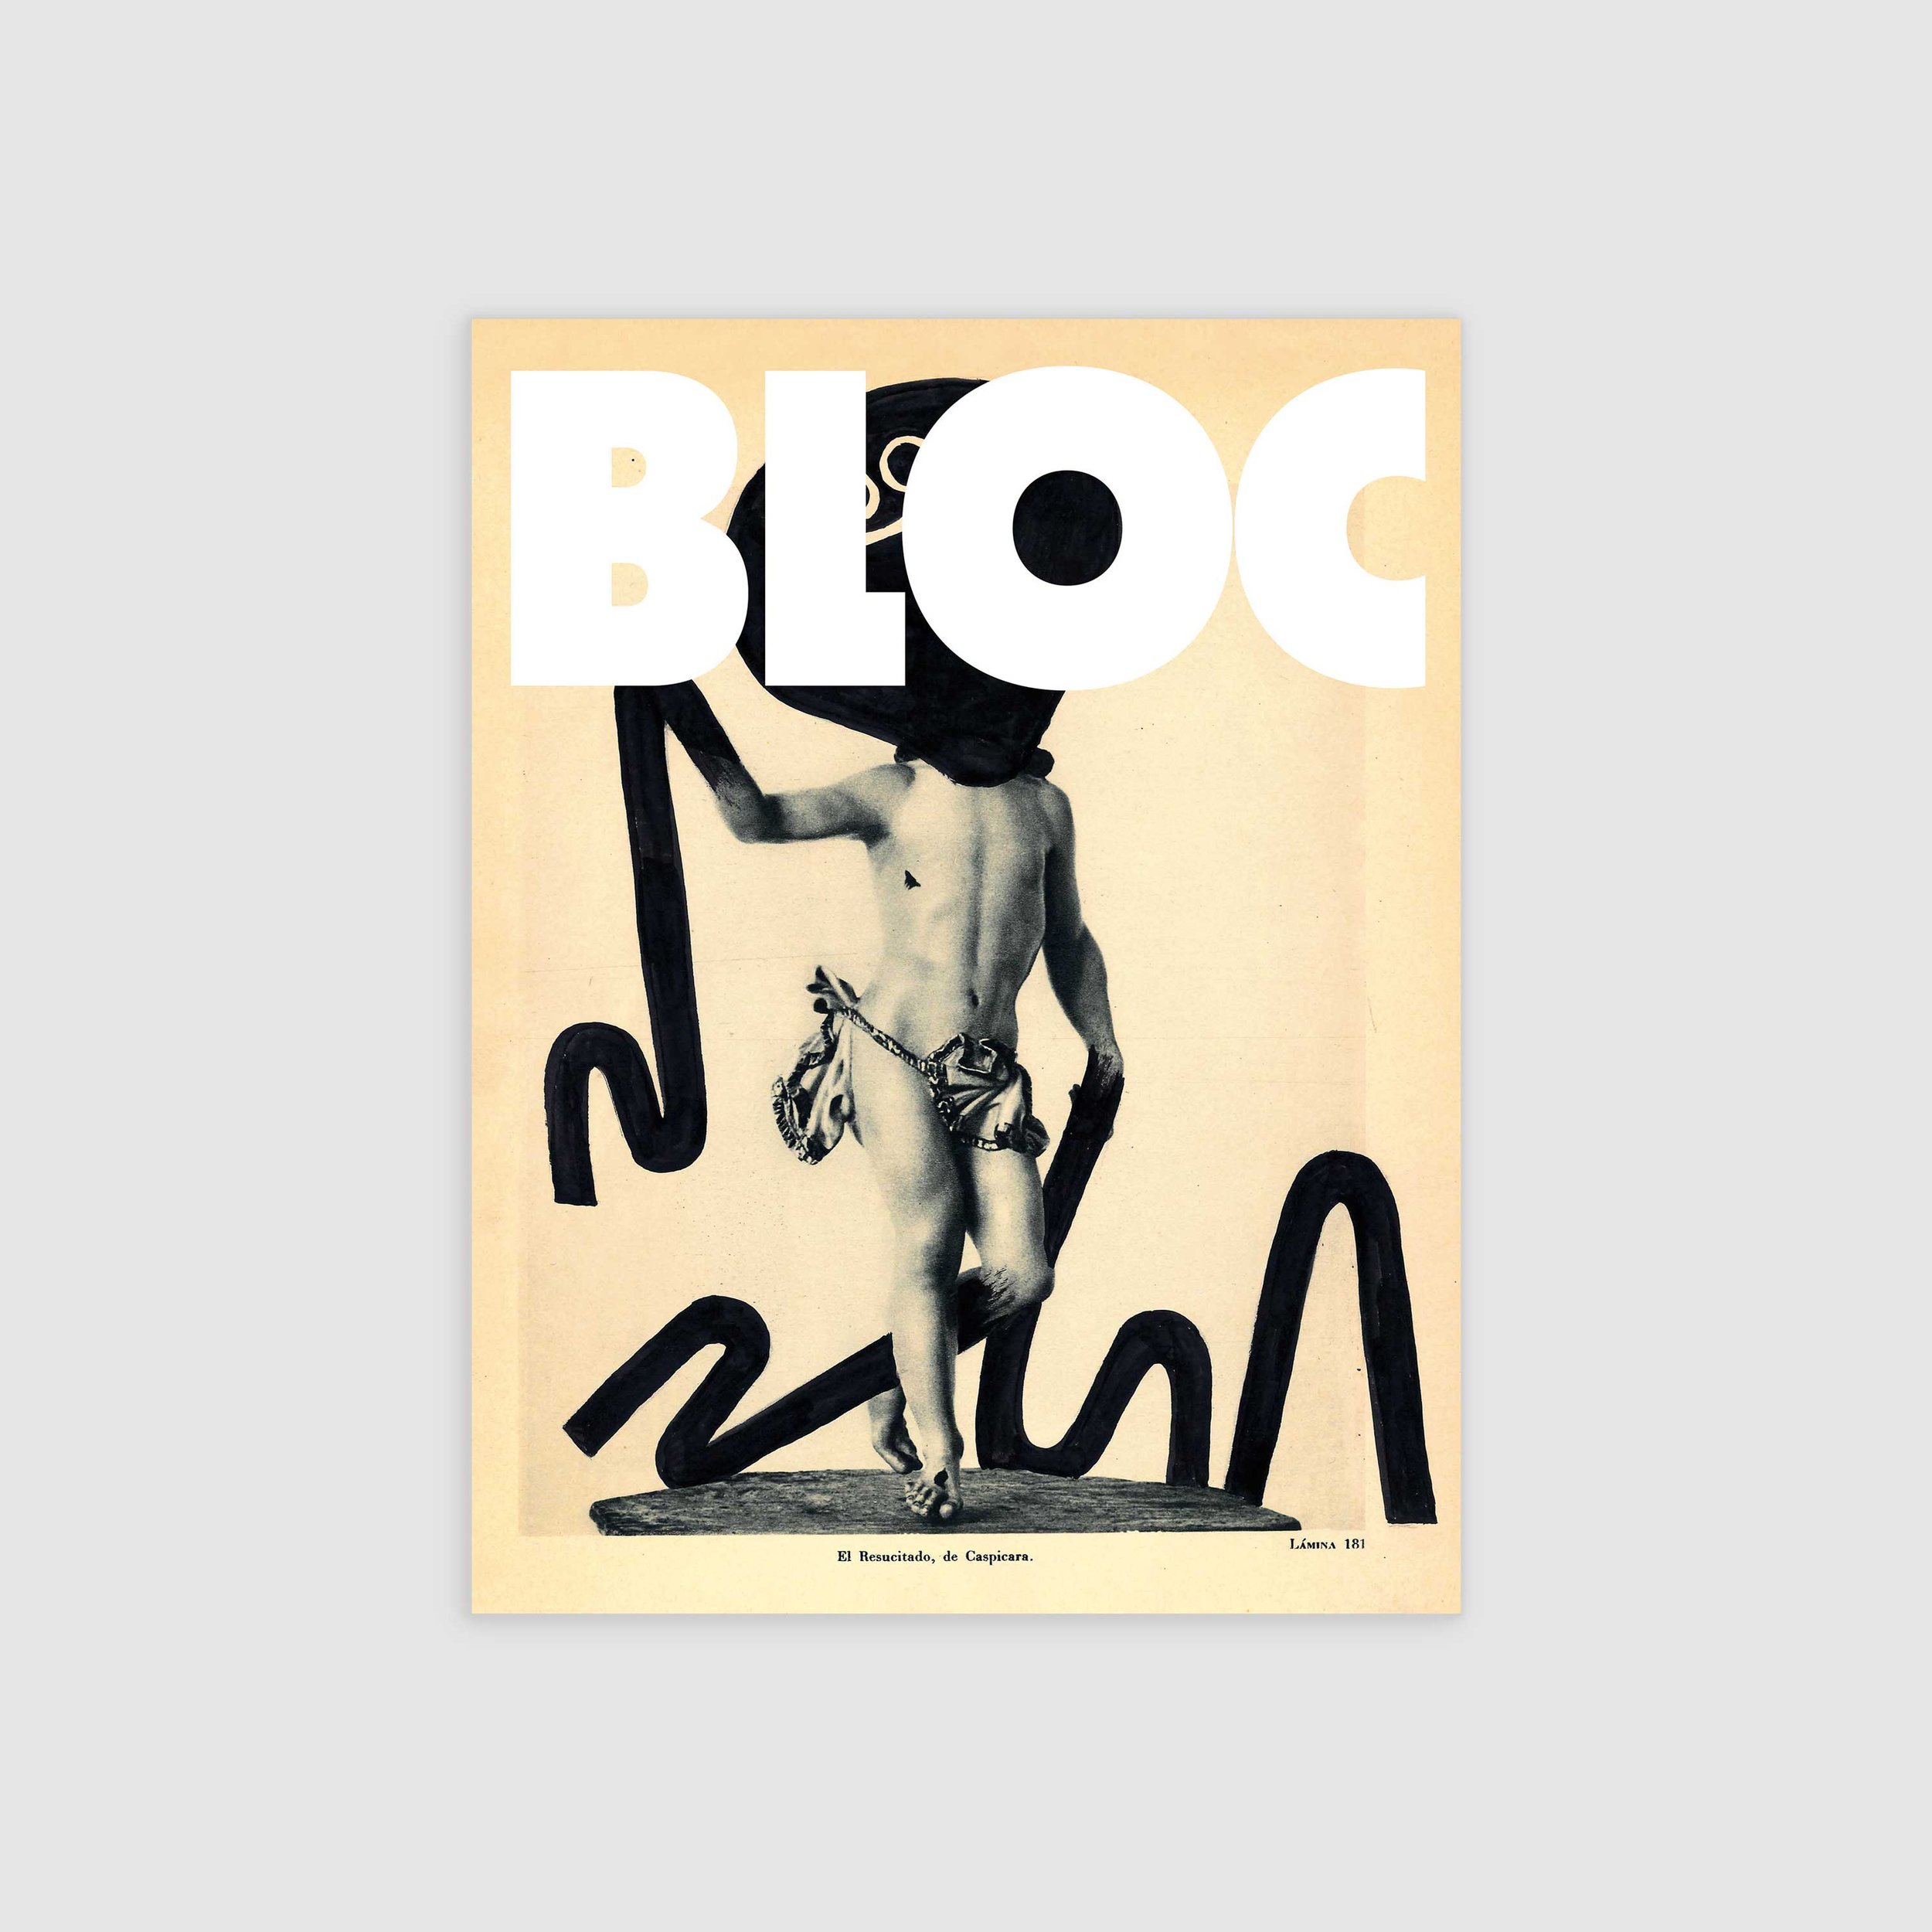 Bloc2---front-cover-flat.jpg